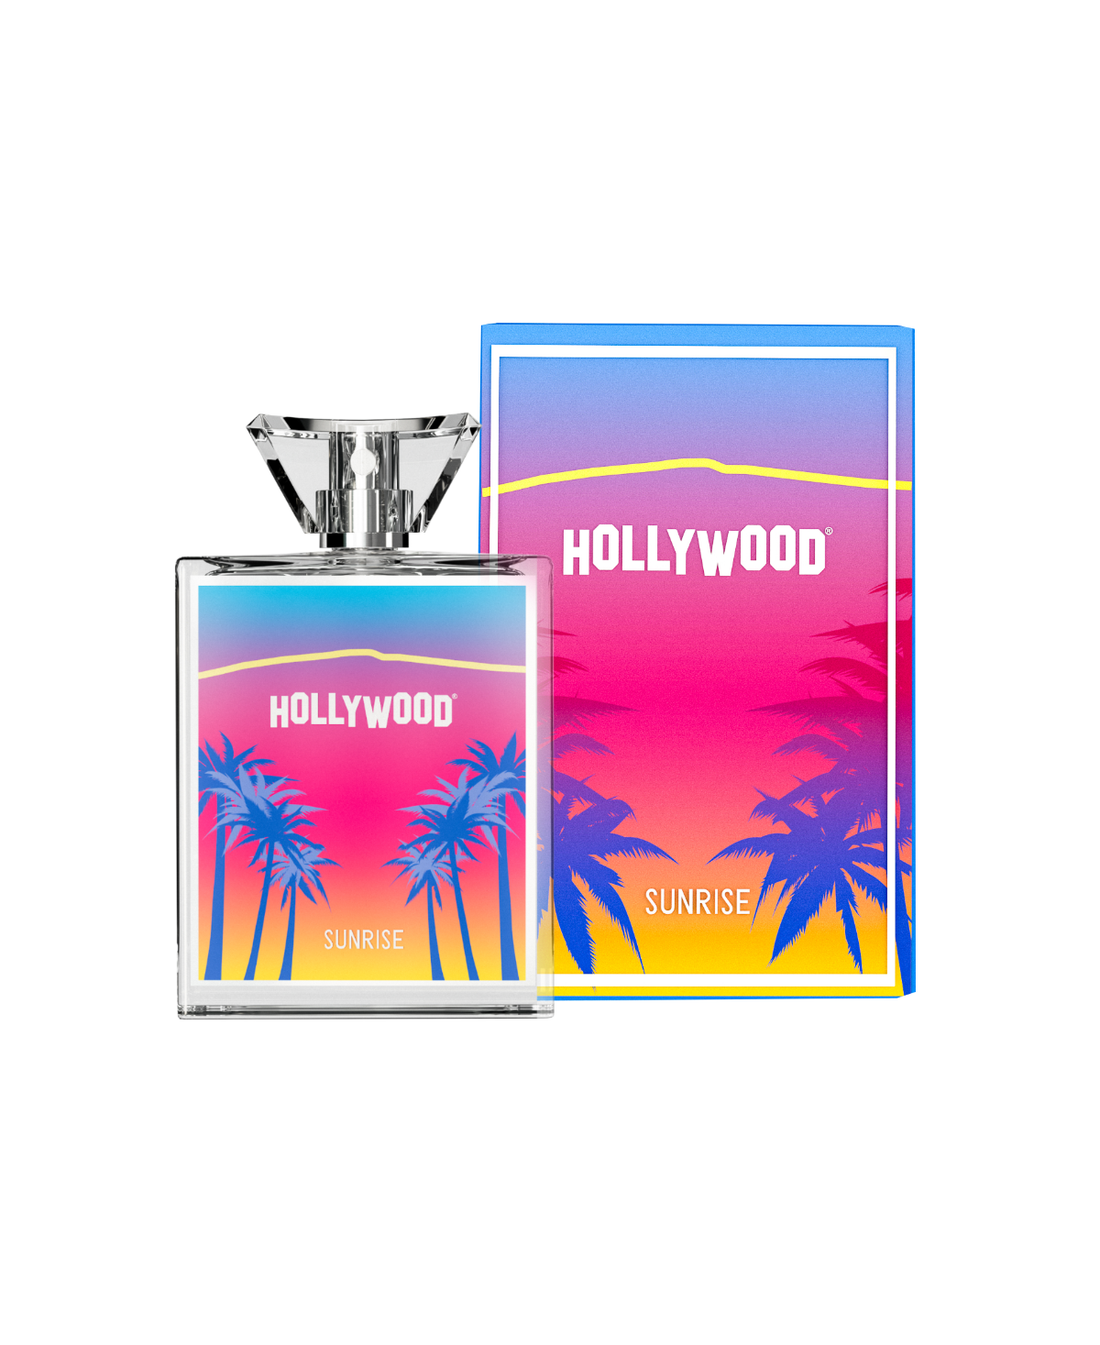 Hollywood Sunrise - A fragrance by Vince Spinnato